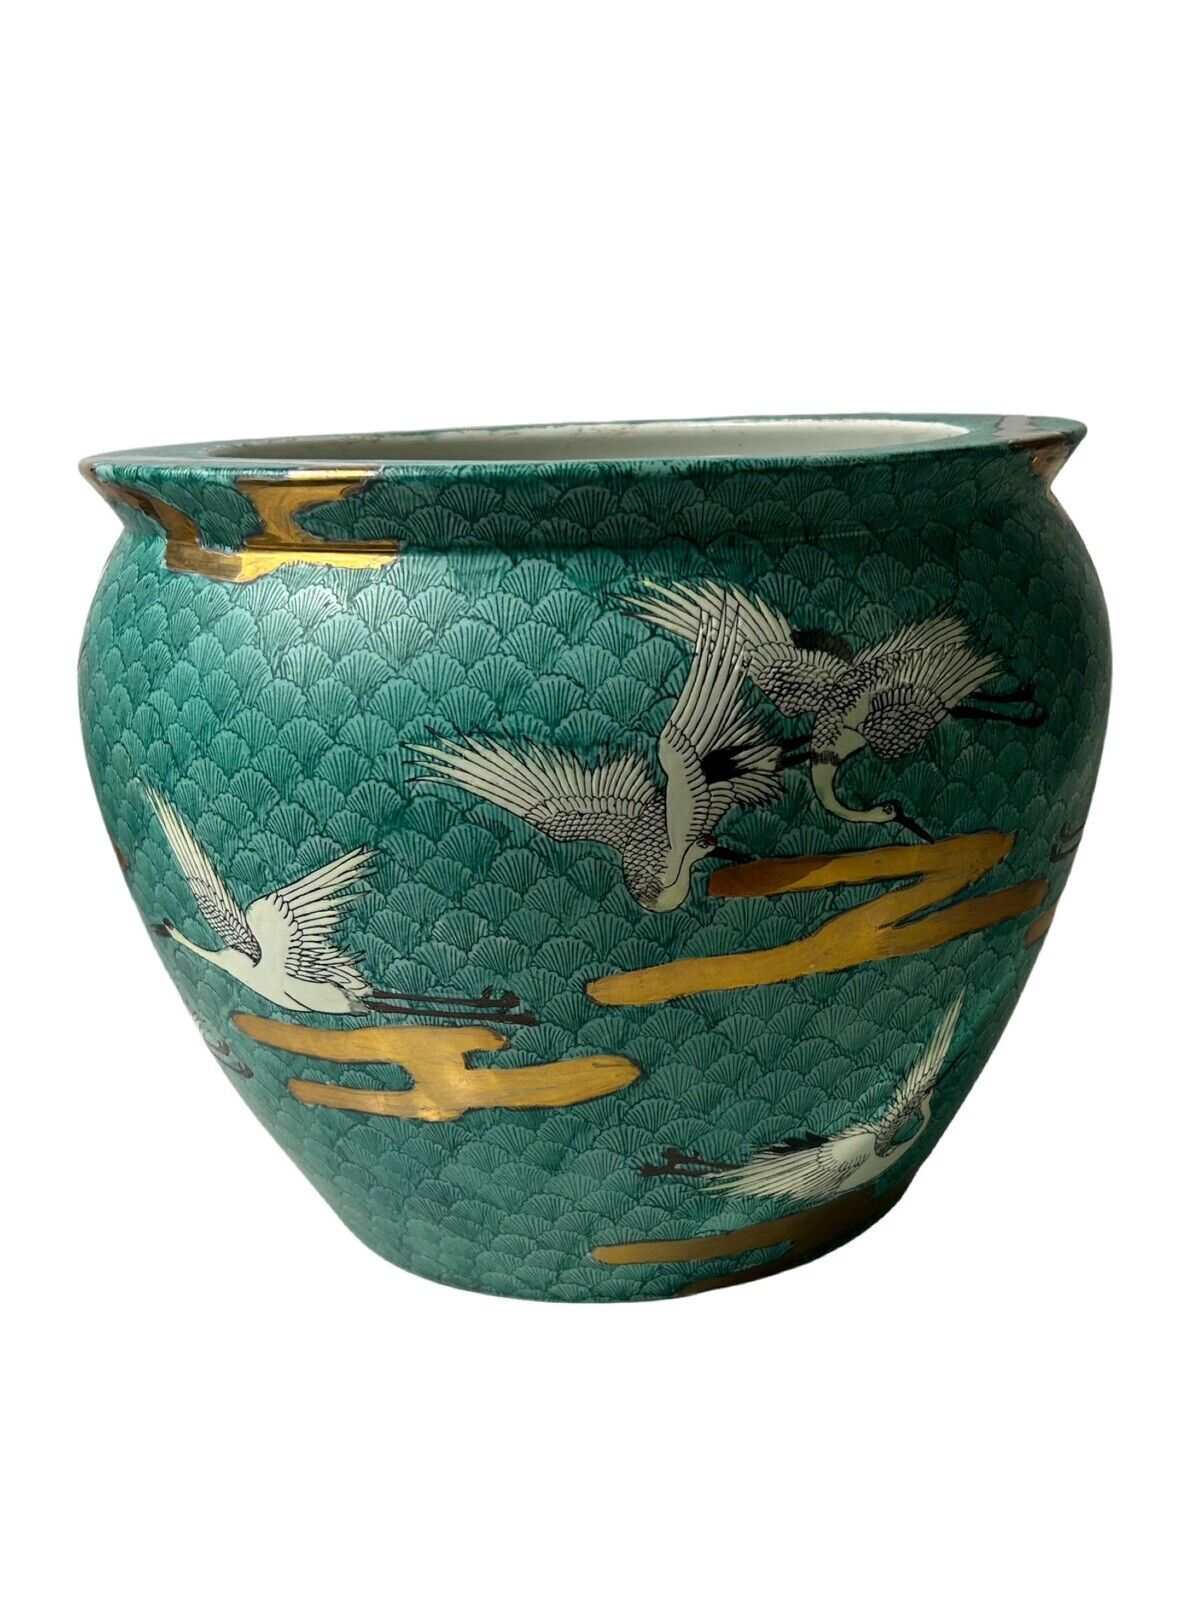 Japanese Koi Pot Green Blue Planter Bowl White Herons 12 1/2 “w X 10 1/4”h